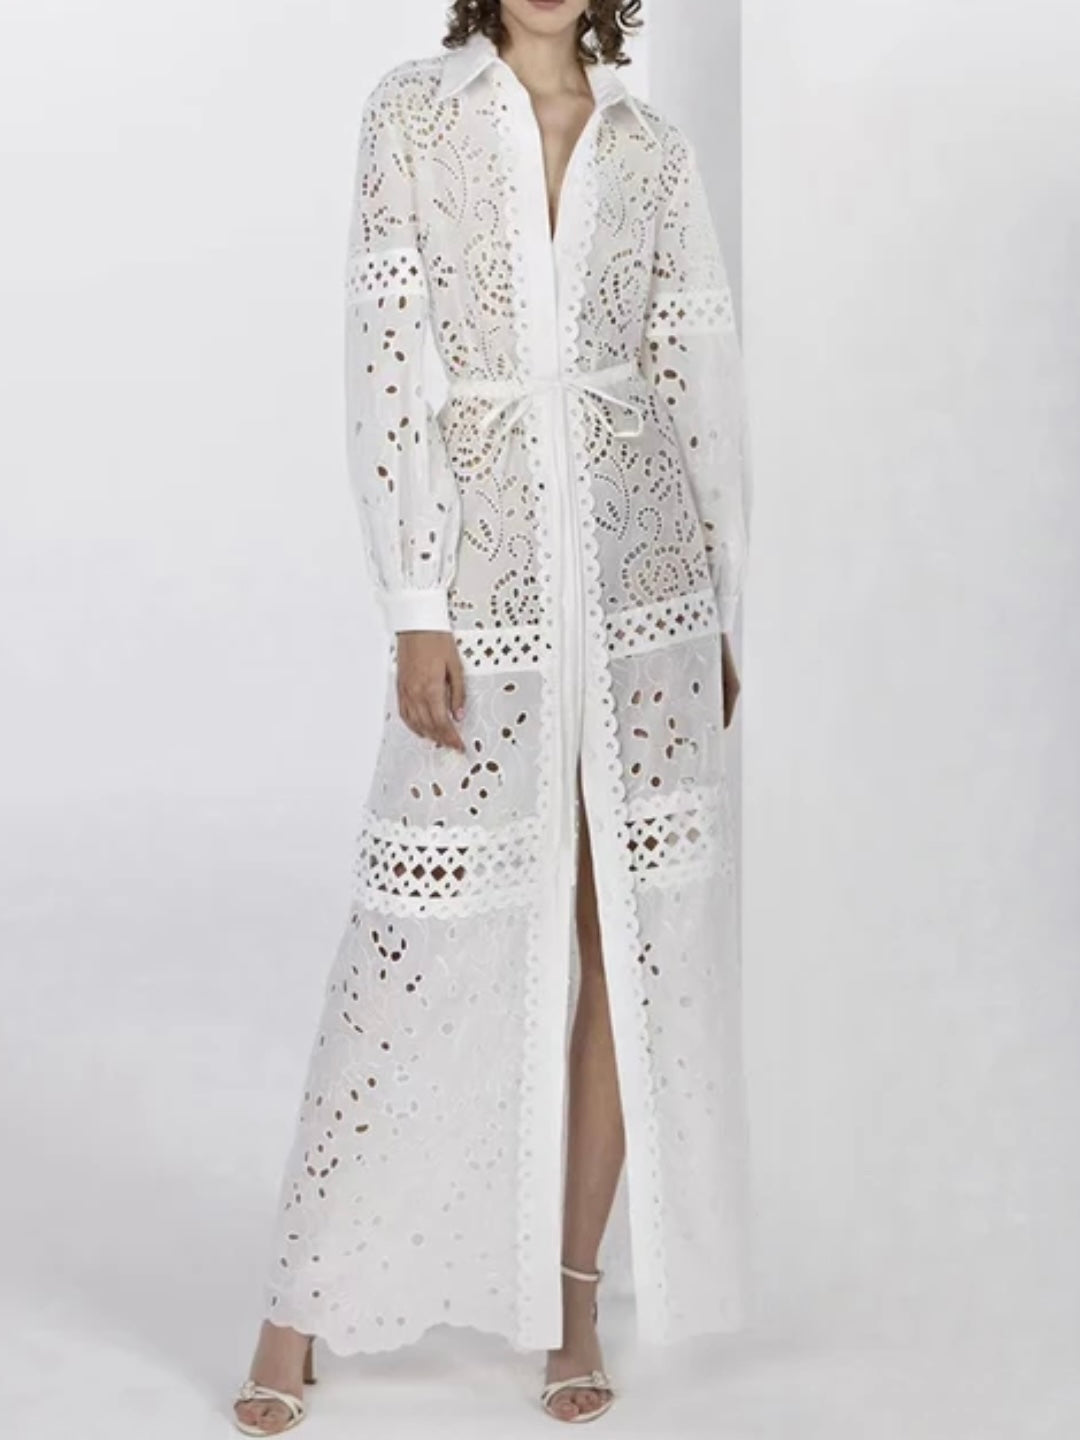 White open front lace maxi dress